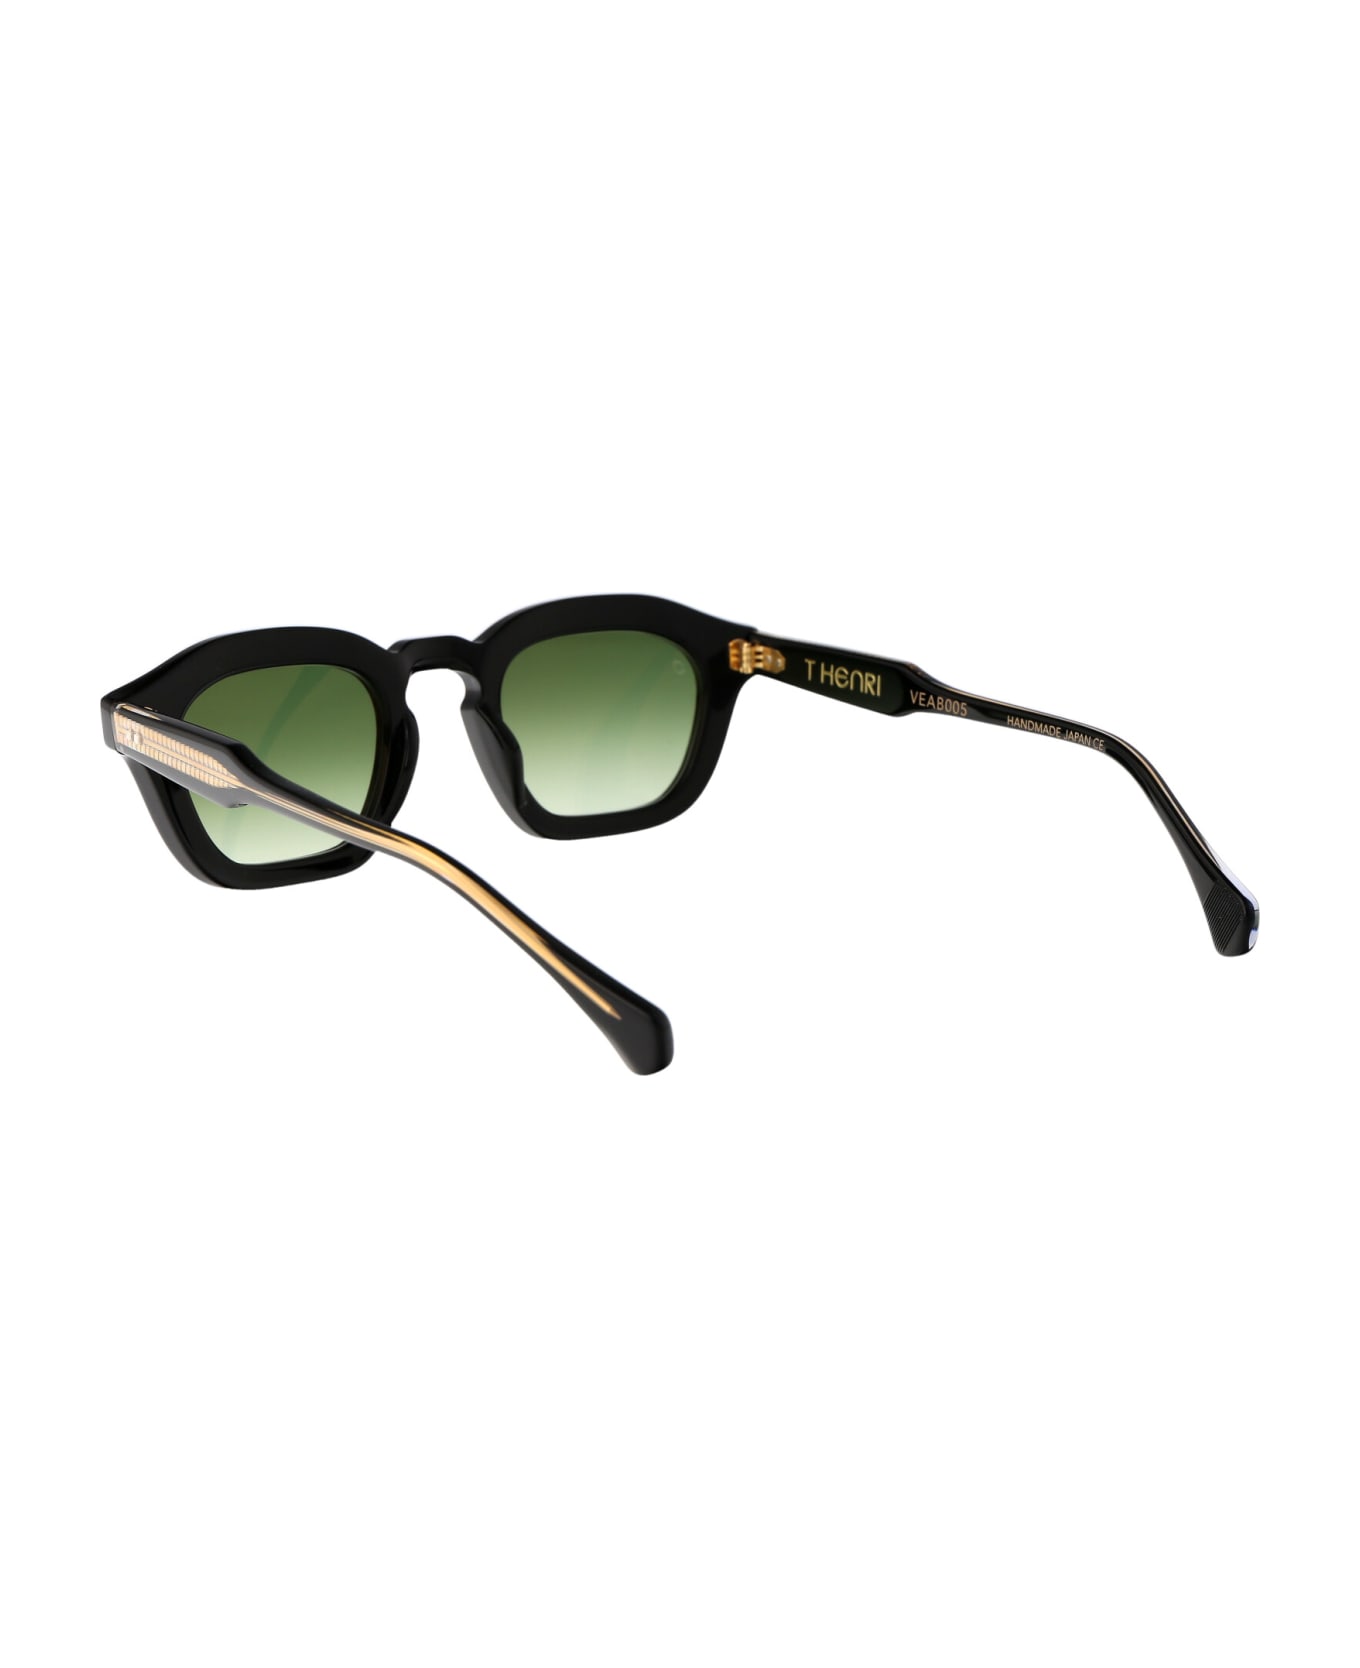 T Henri Veneno Sunglasses - ASTEROID サングラス